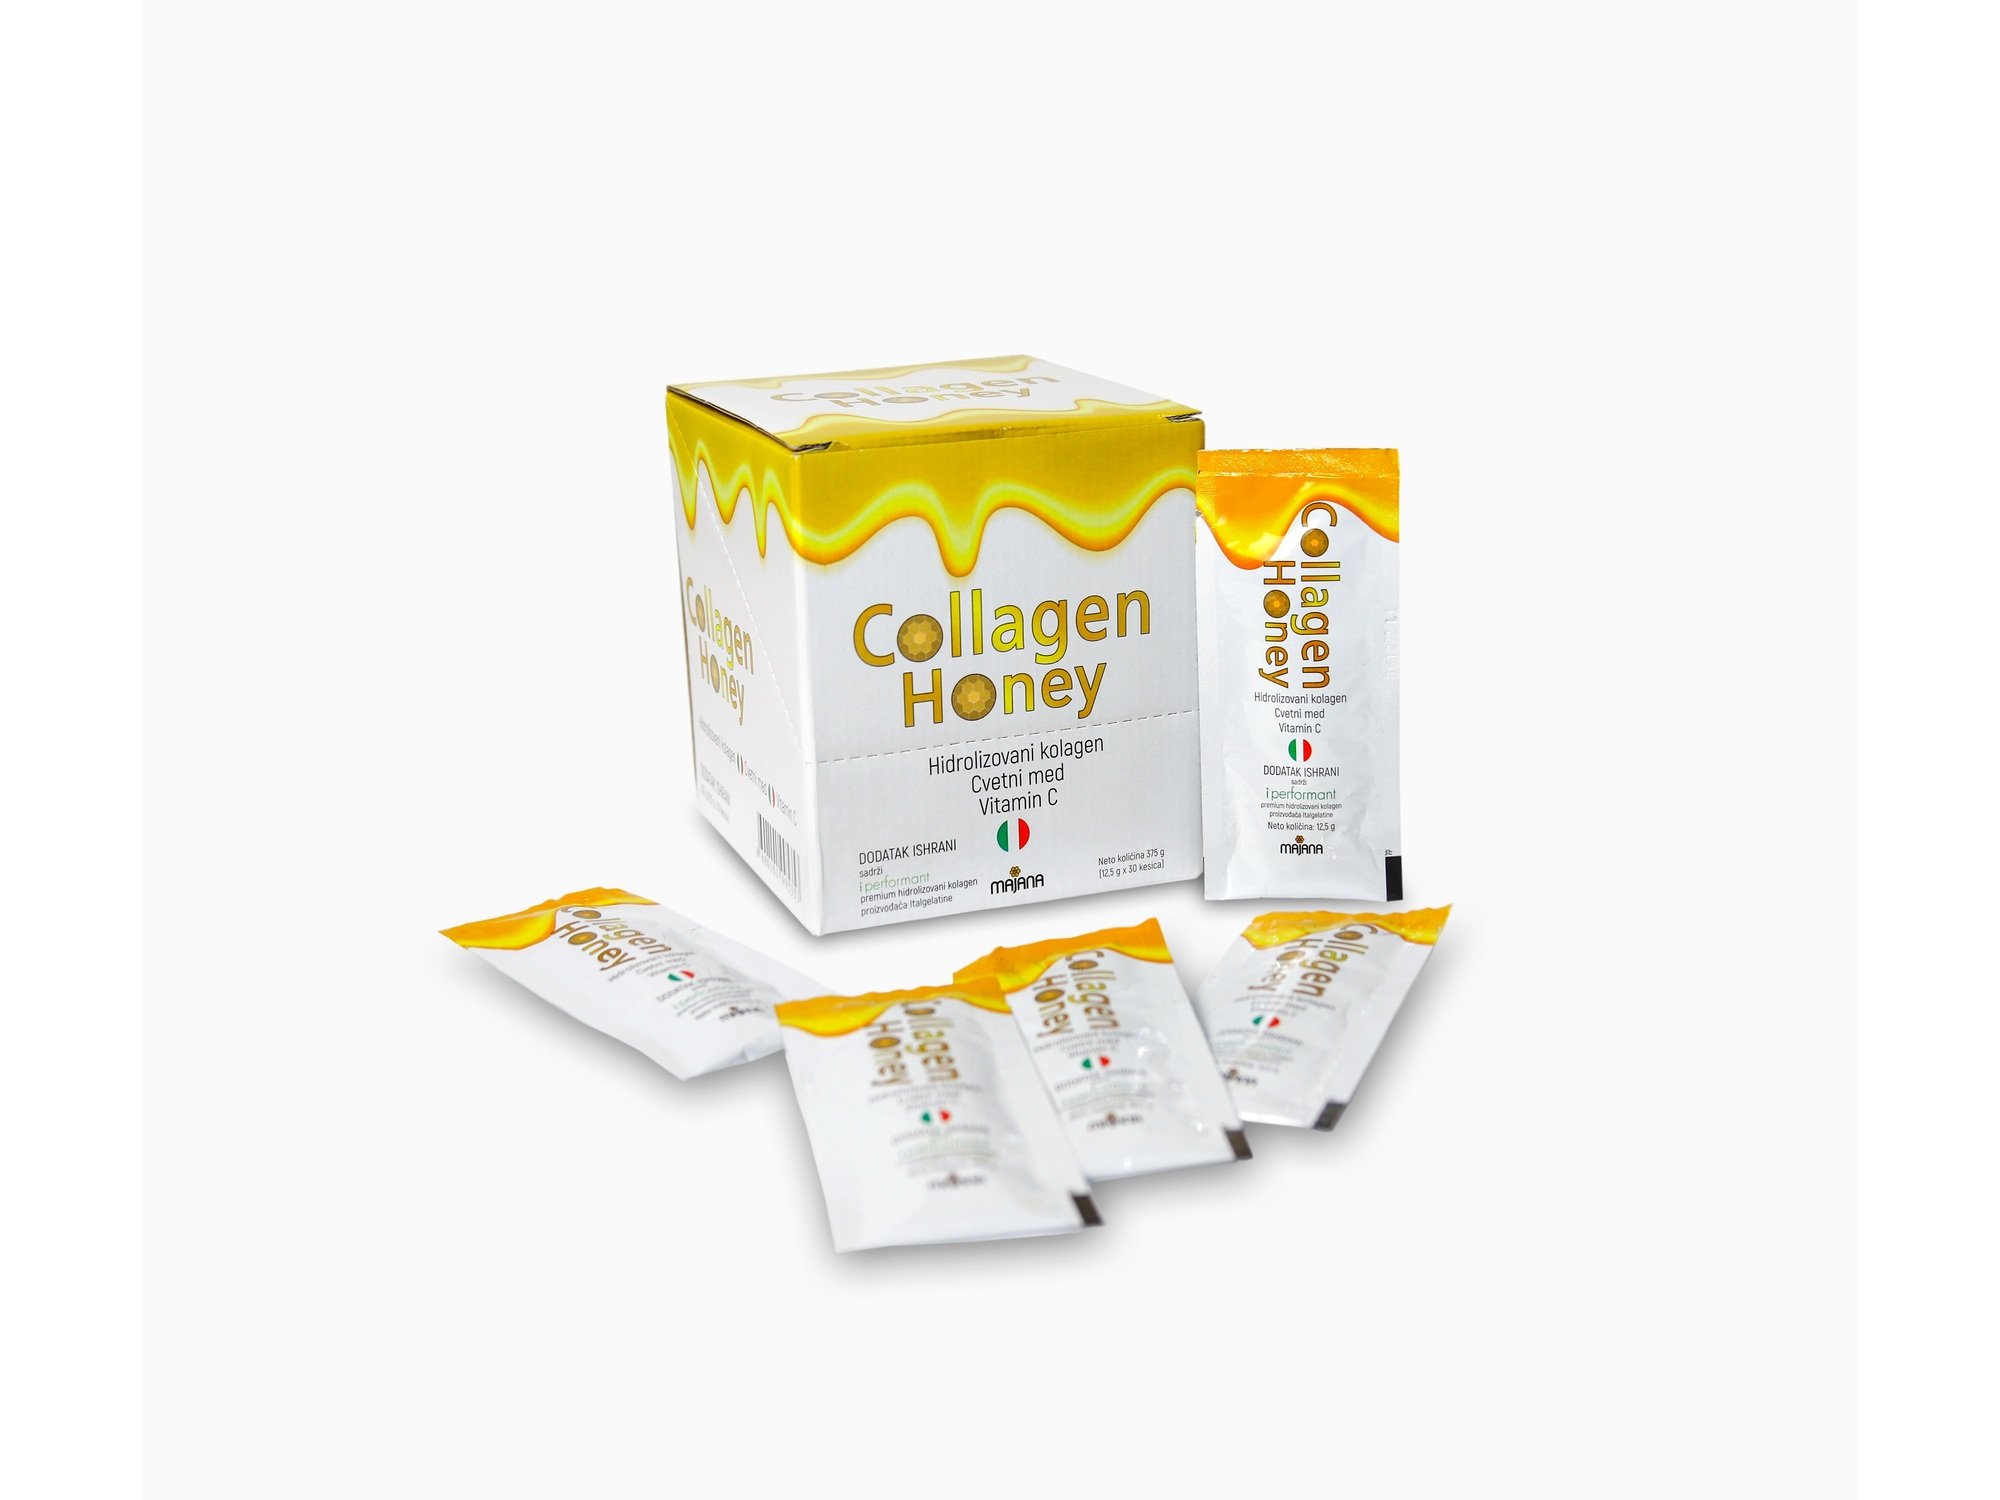 Majana Collagen Honey 375g